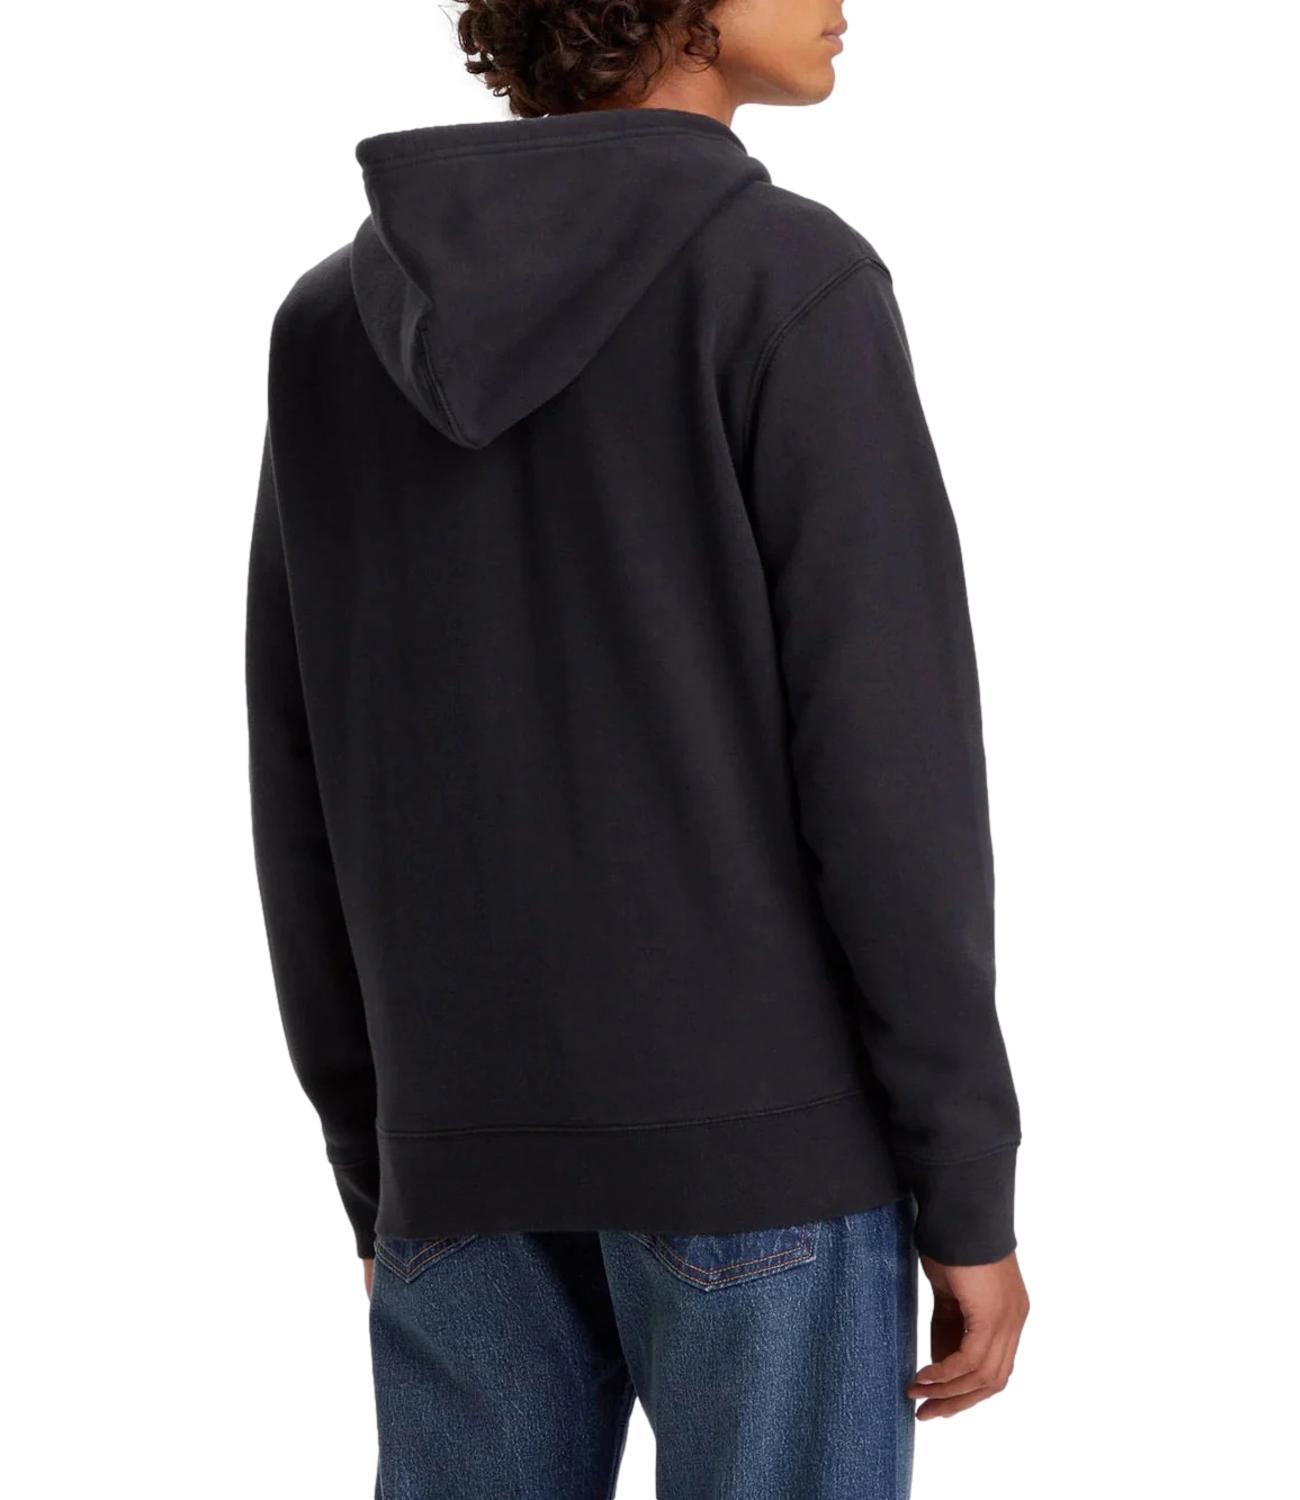 The original HM HOODIE brushed men's black sweatshirt with zip and cotton hood